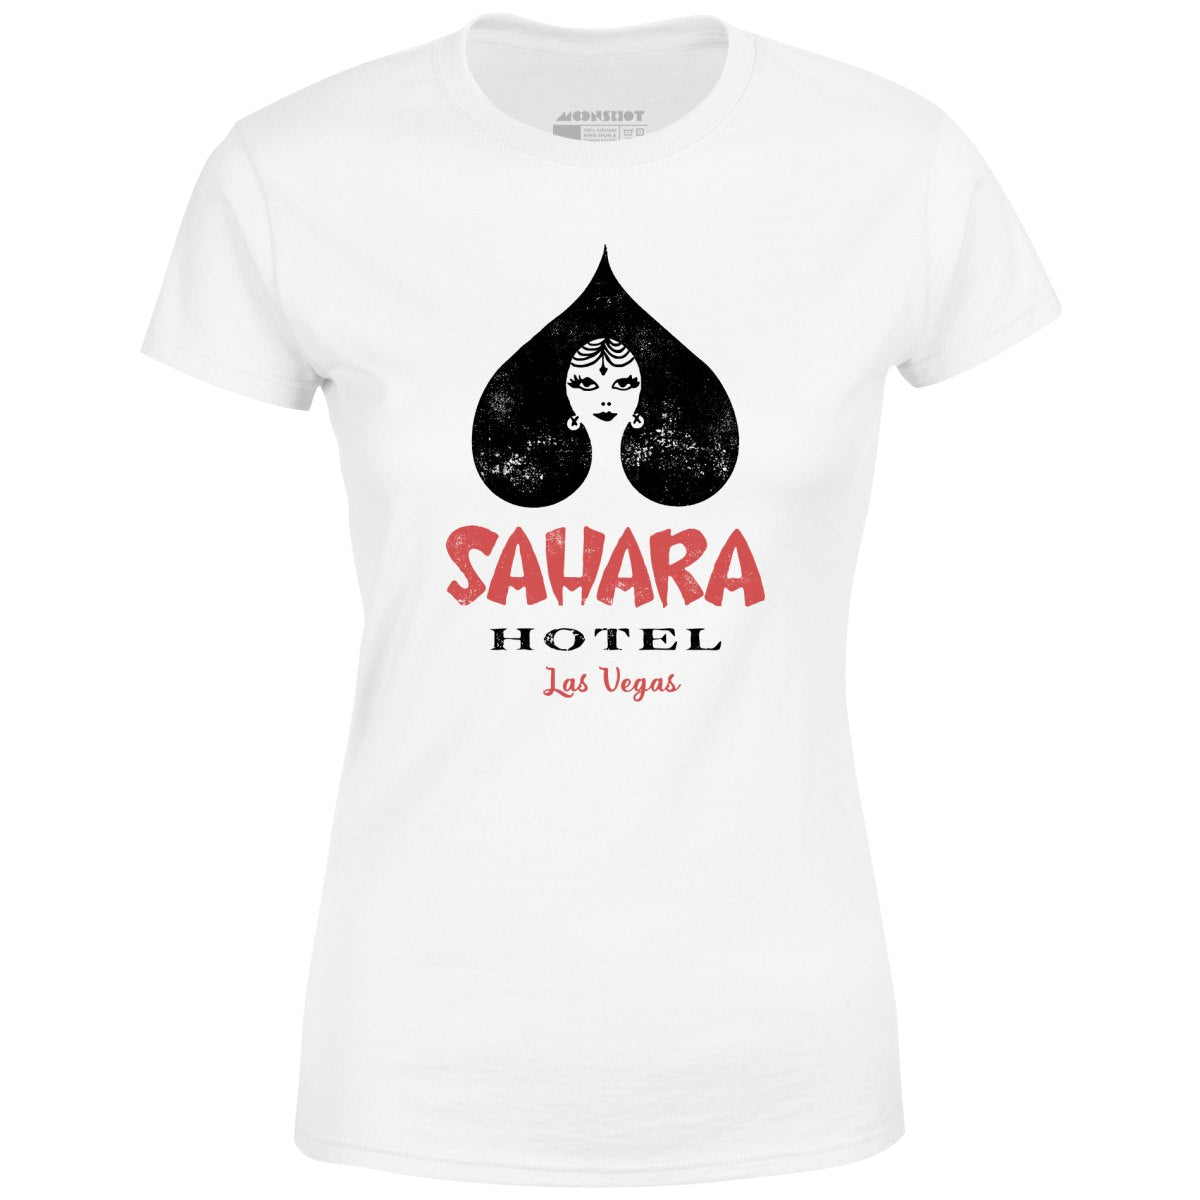 Sahara Hotel v4 - Vintage Las Vegas - Women's T-Shirt